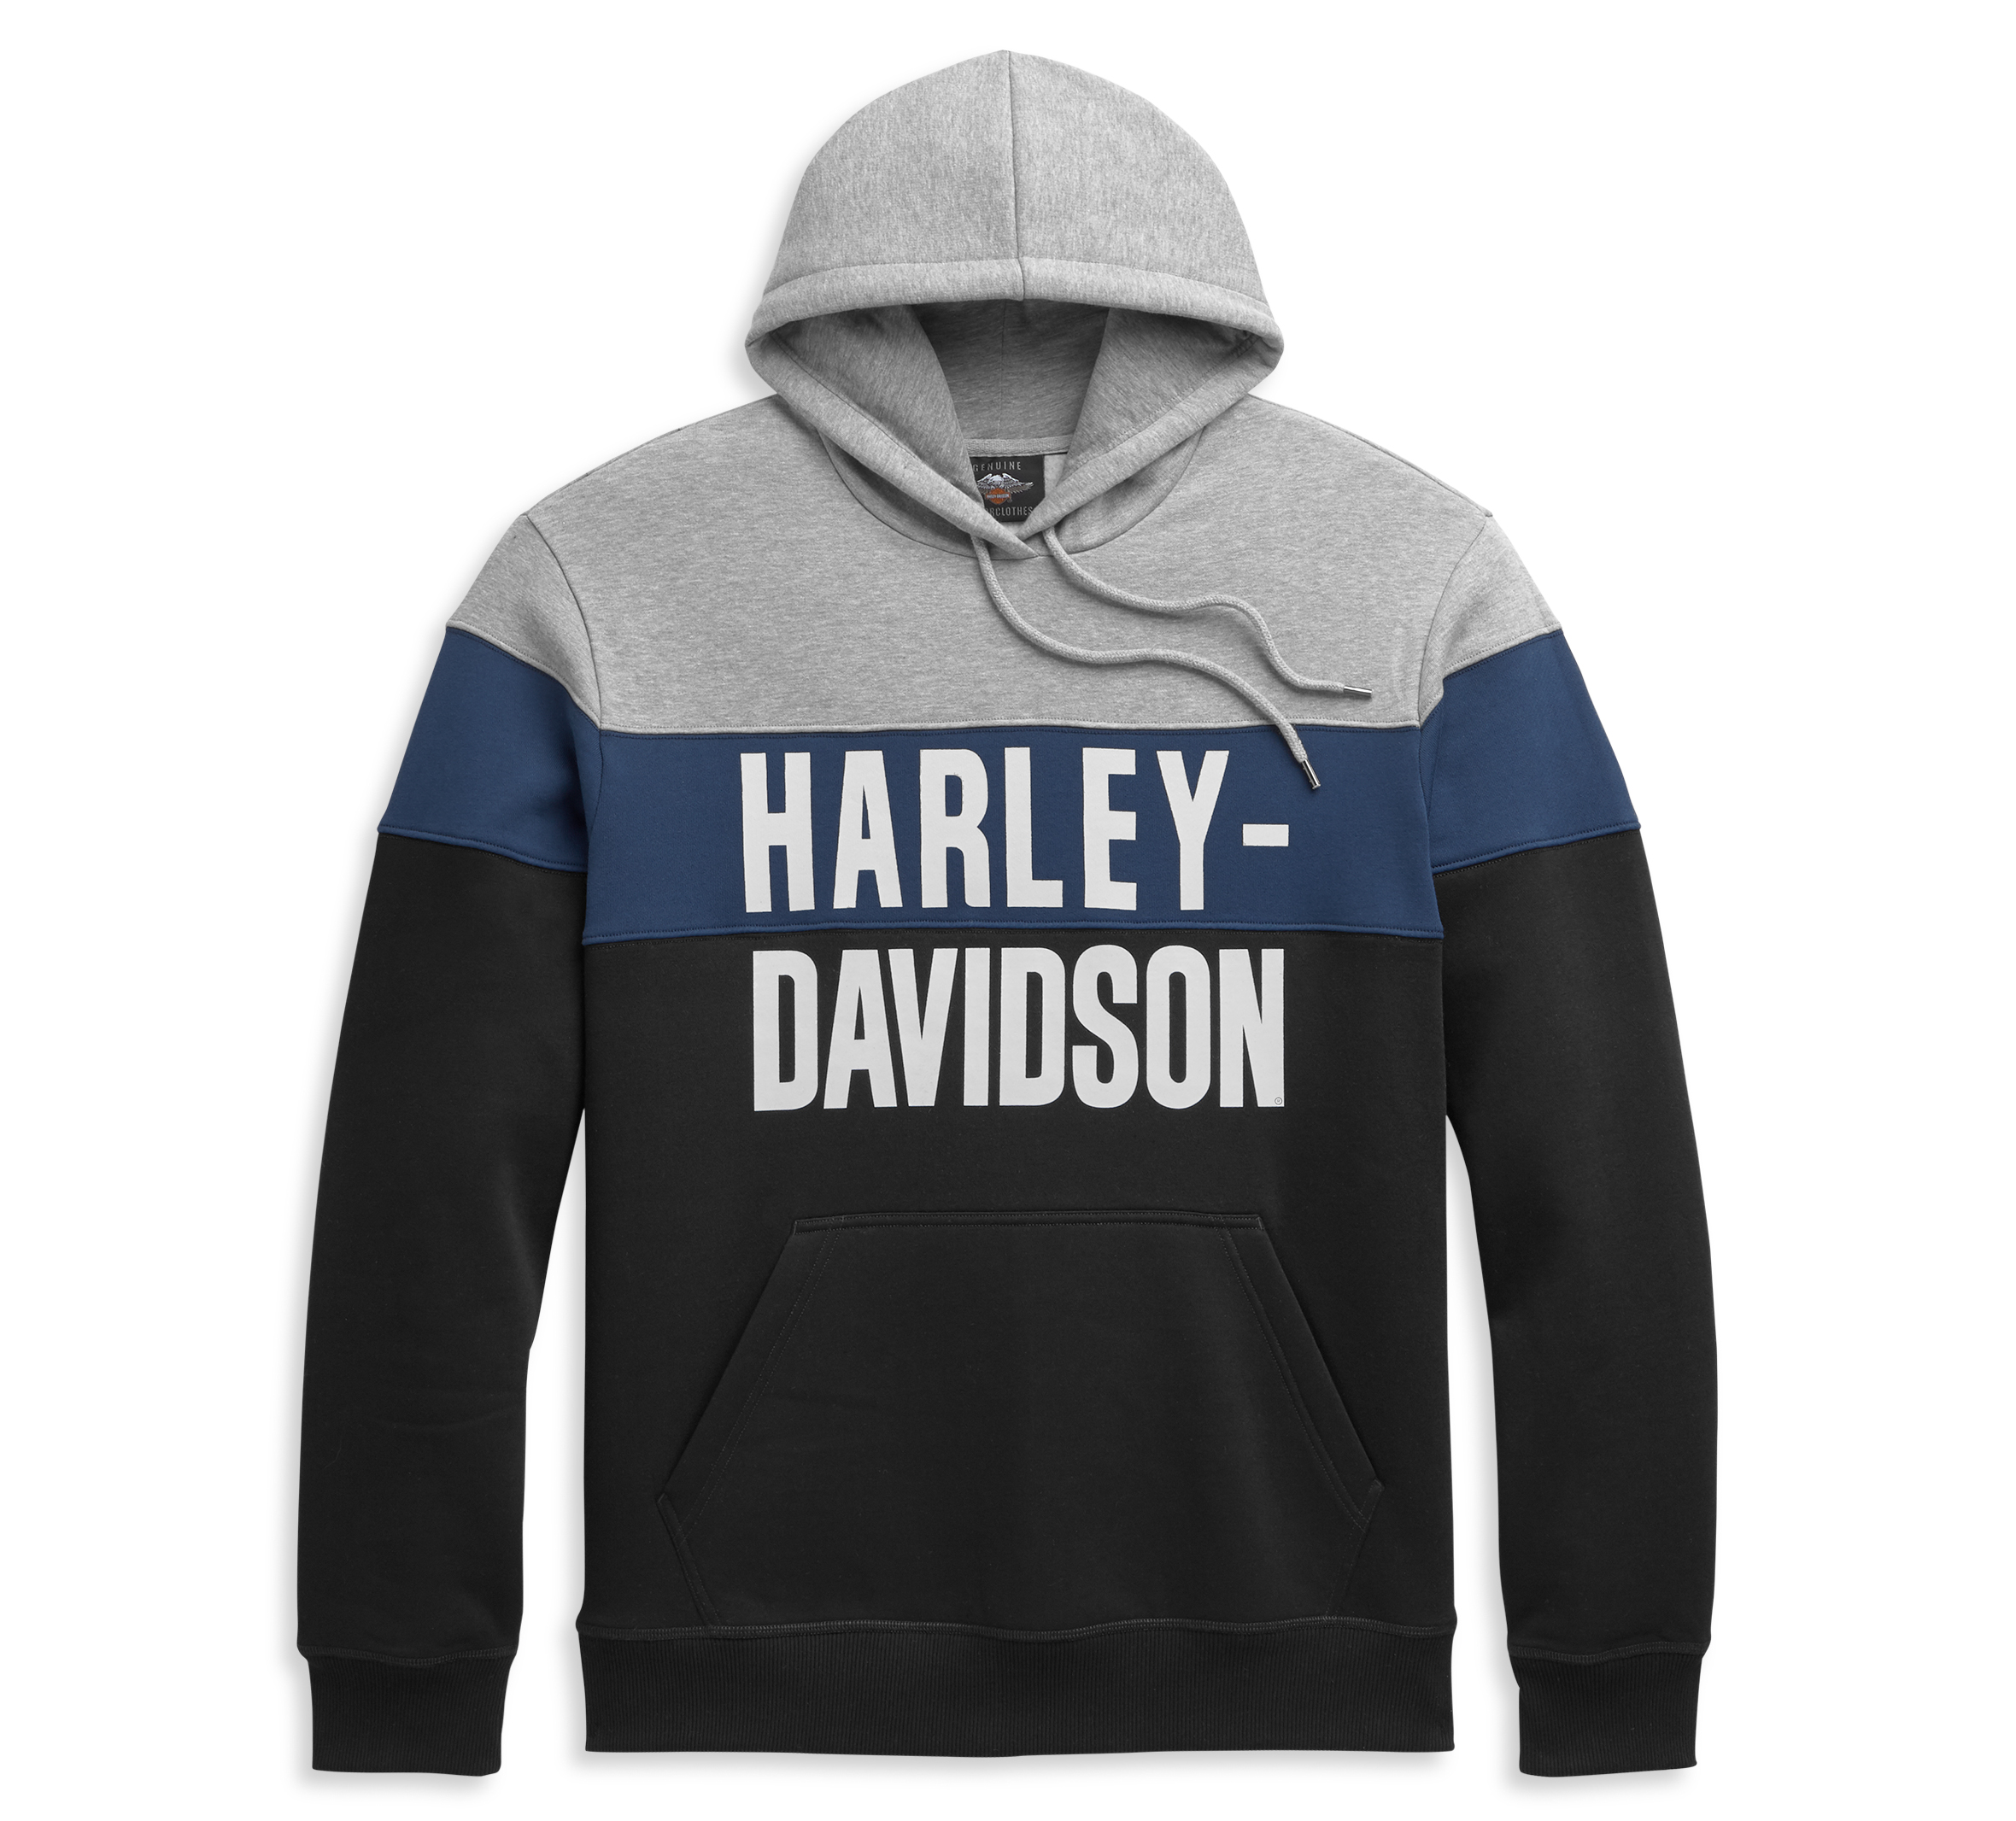 Buy Harley Davidson Military Hoodie Cheap Online